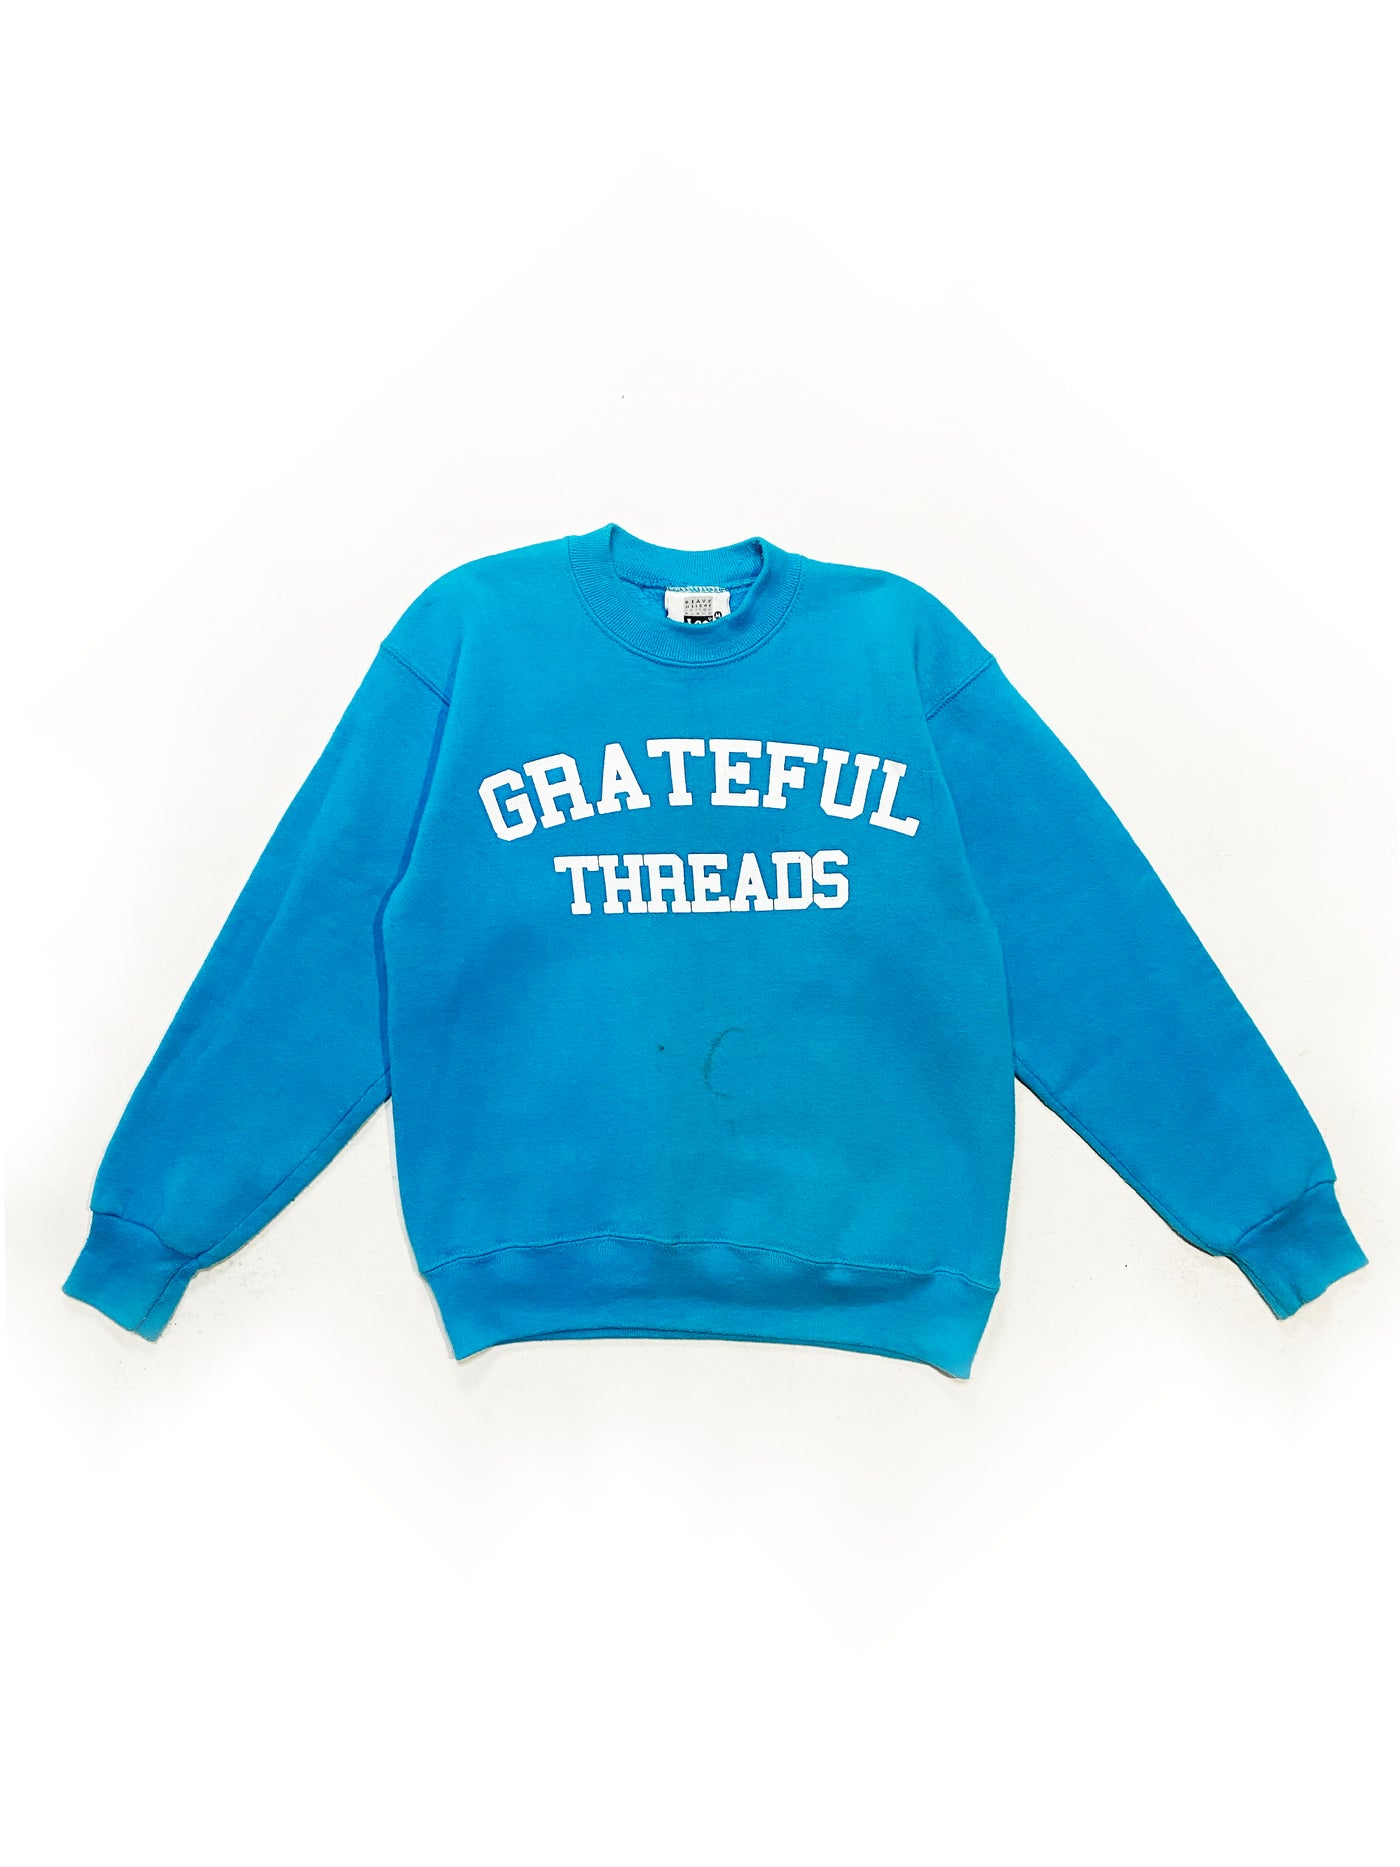 90s Lee Heavy Grateful Threads Spellout Crewneck - Aqua Blue - Size M